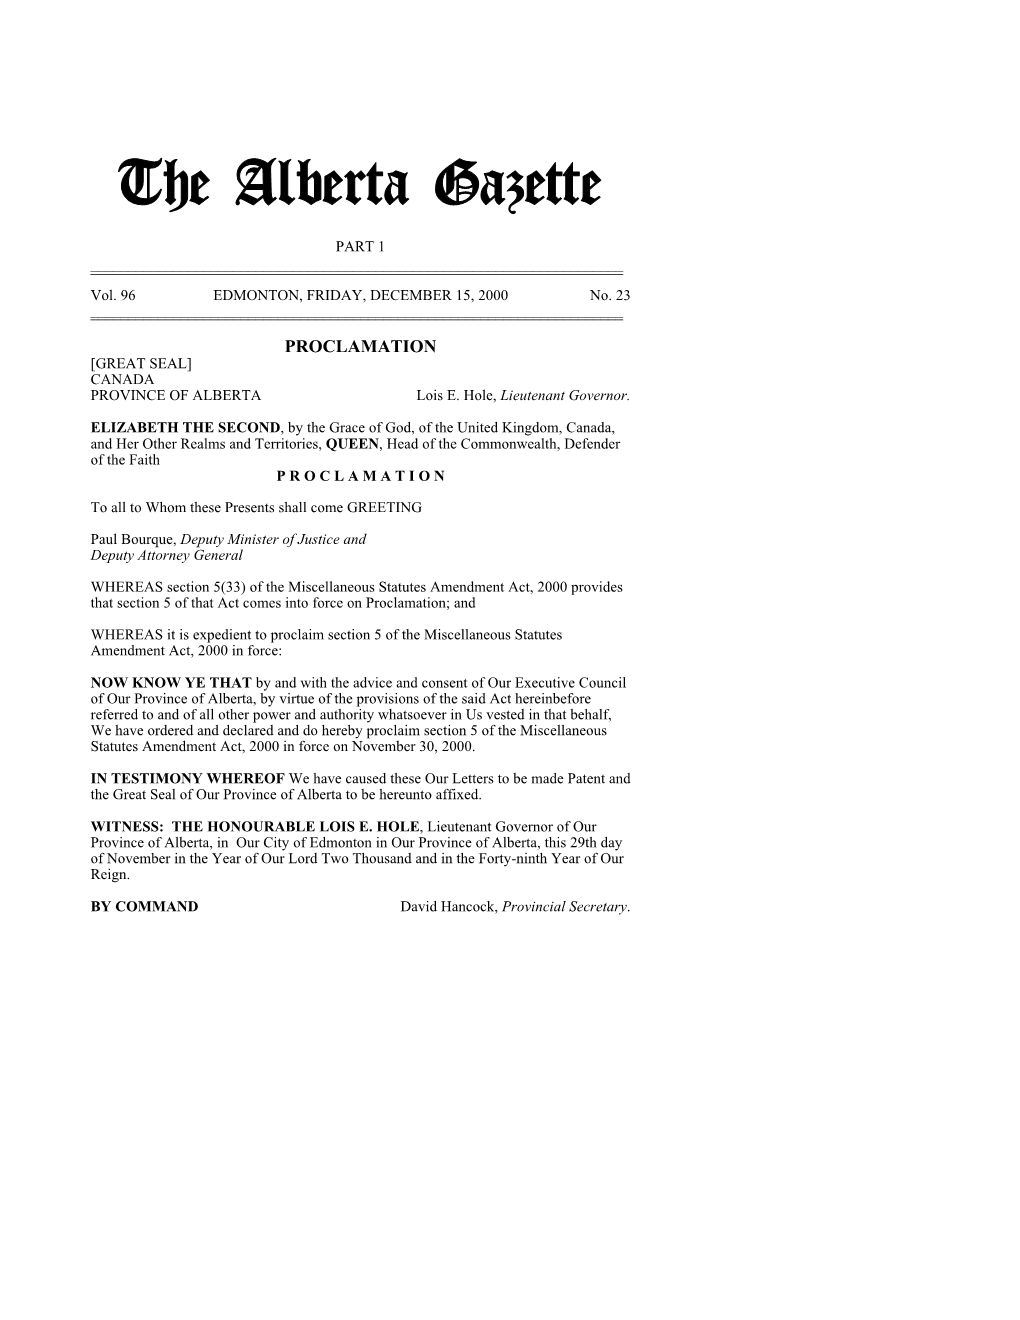 The Alberta Gazette, Part I, December 15, 2000